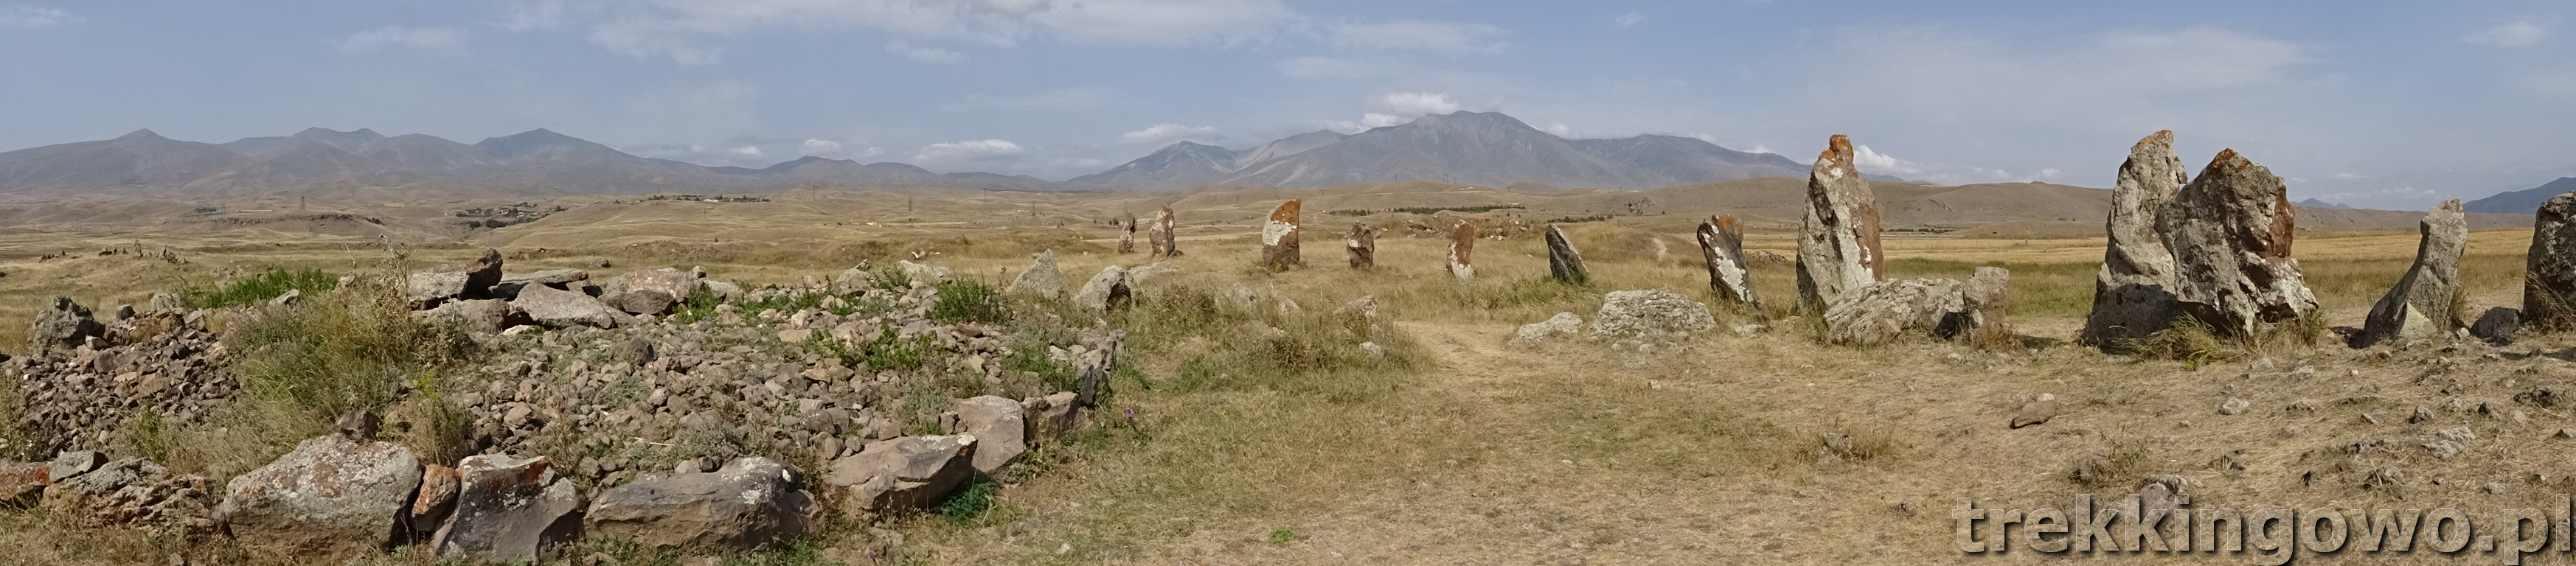 Zorac Karer - ormianski Stonehenge trekkingowo